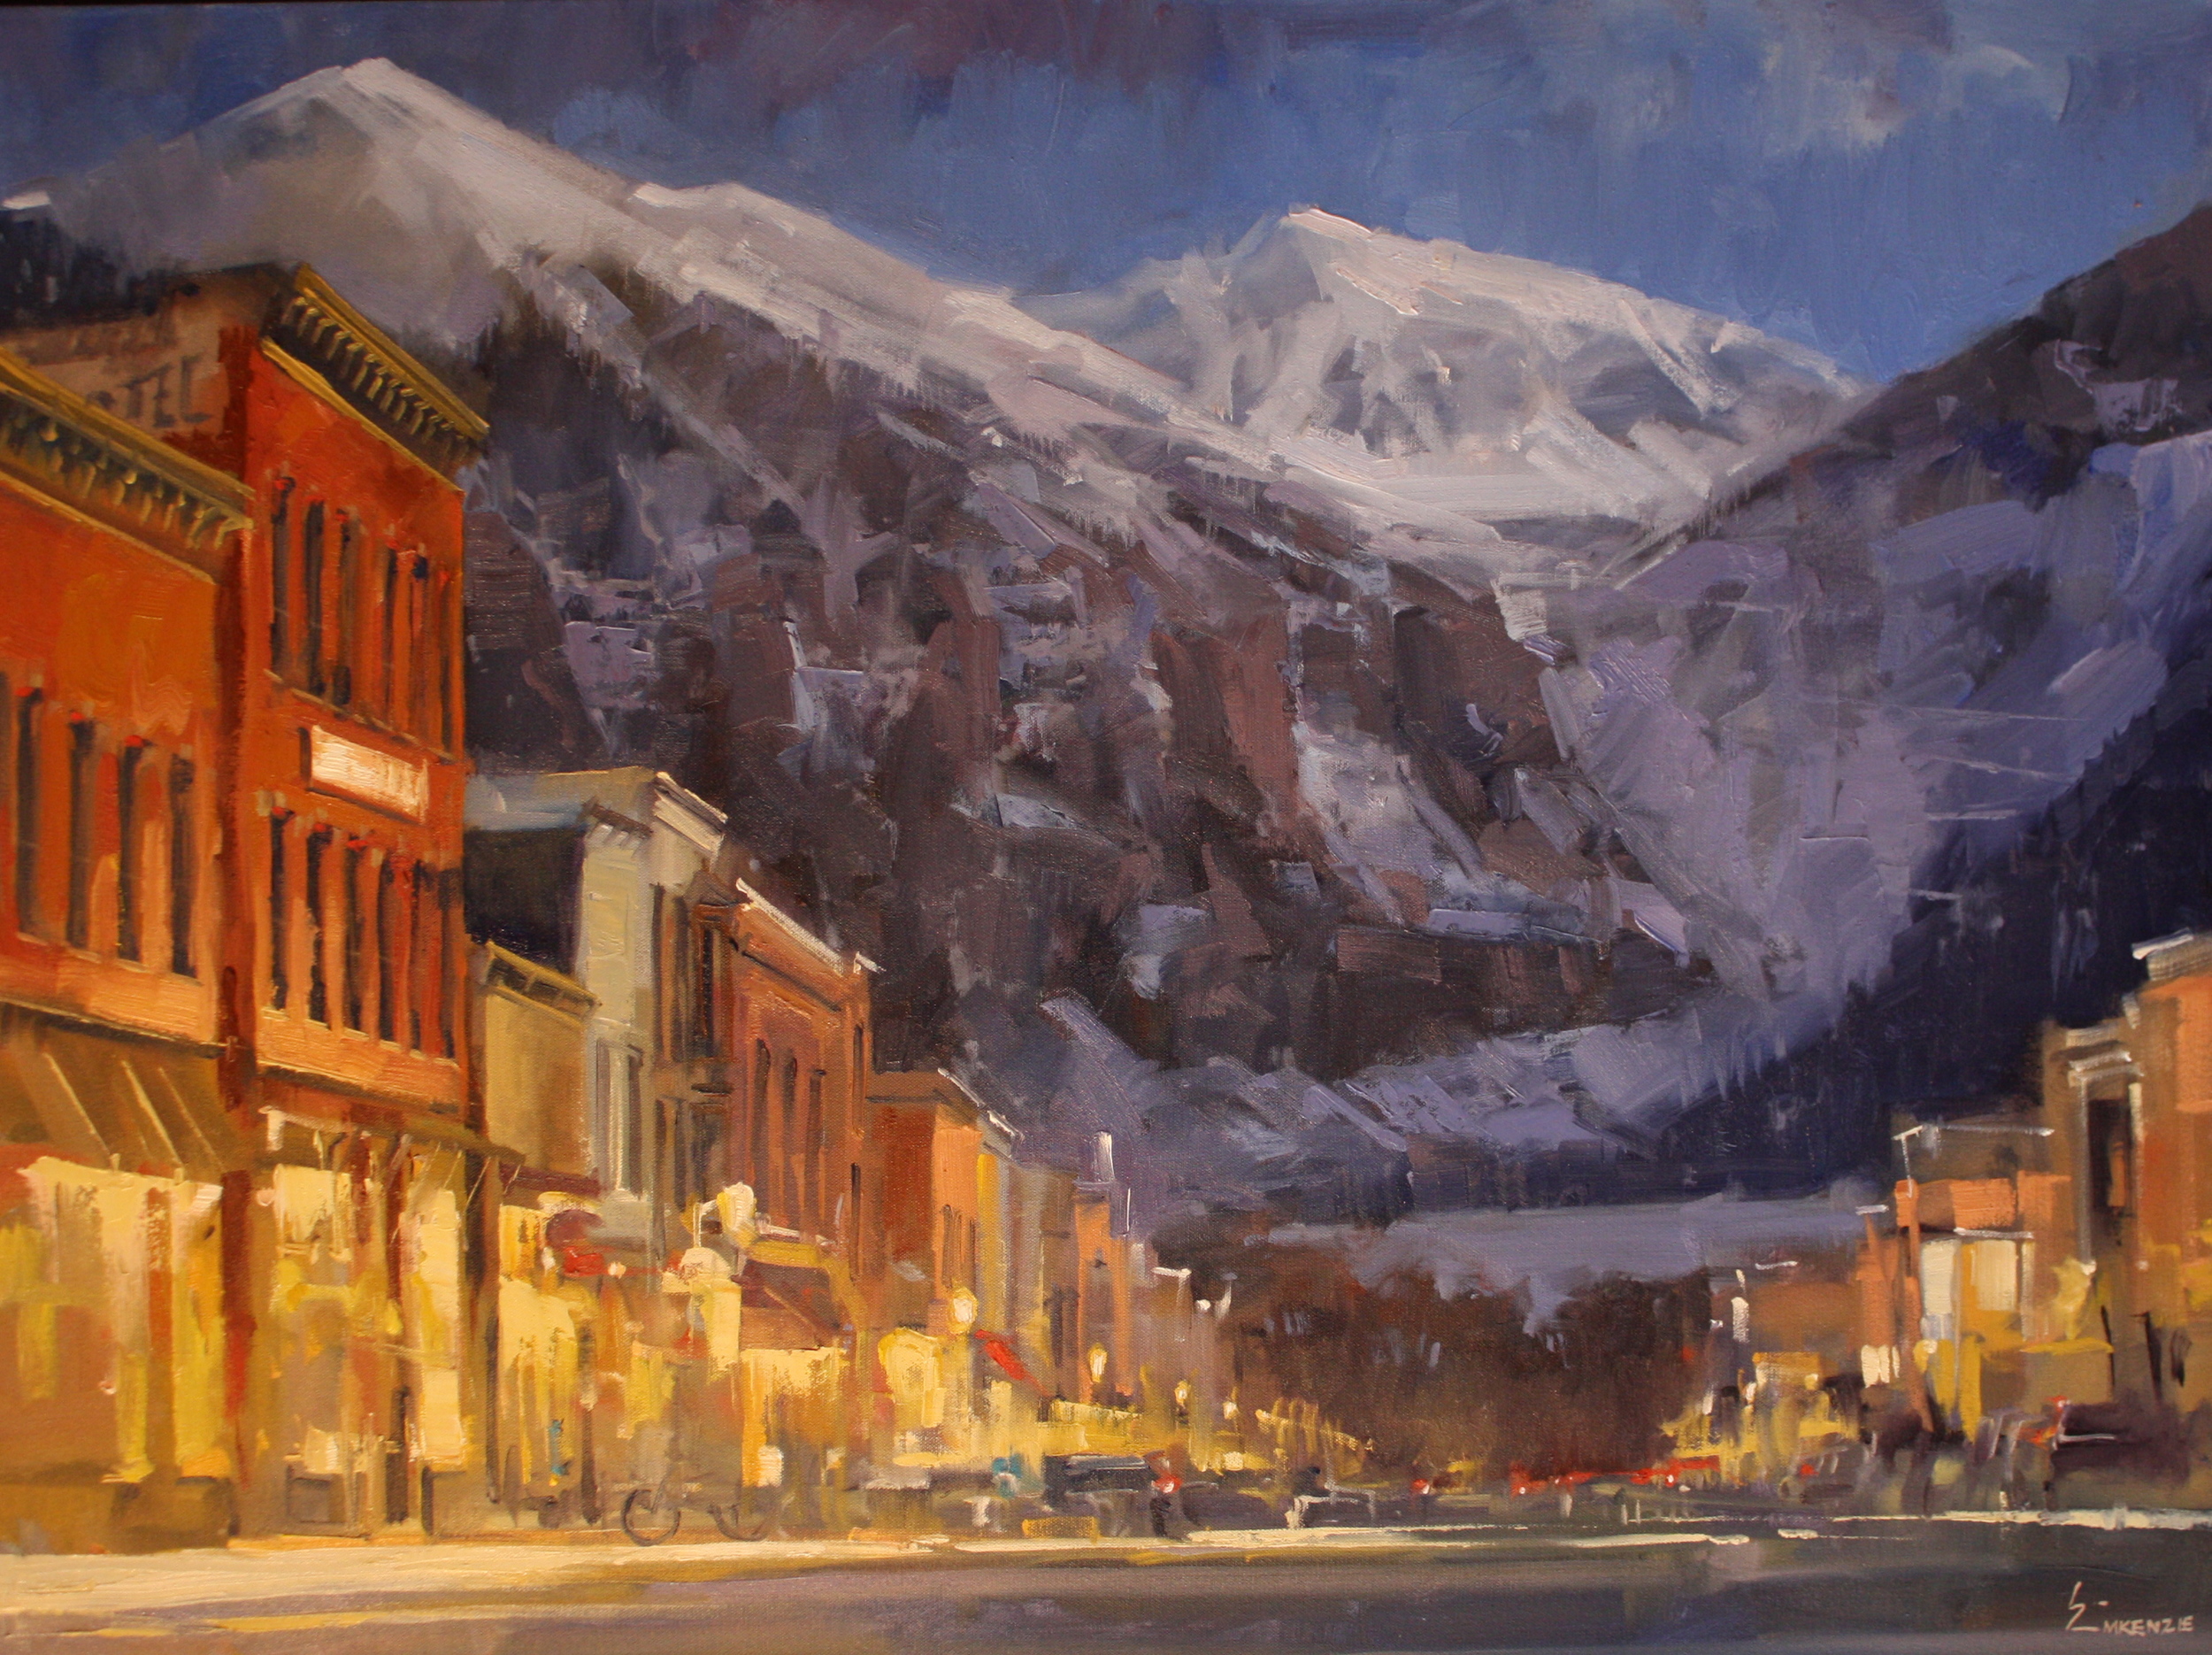  "Winter Lights on Colorado Ave" 30x40, $5000. 